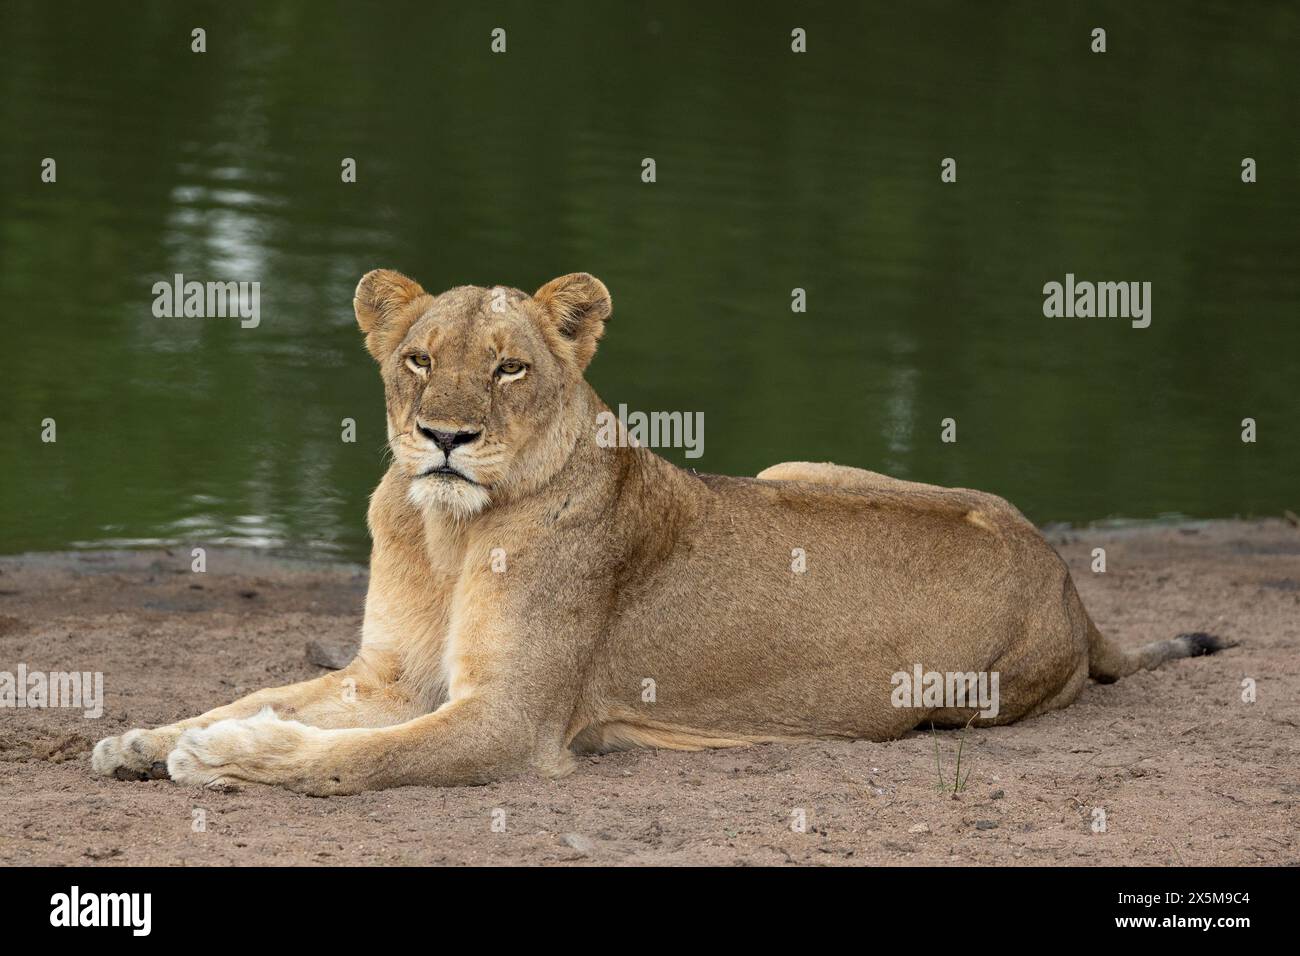 A lioness, Panthera leo, lying next to a dam. Stock Photo